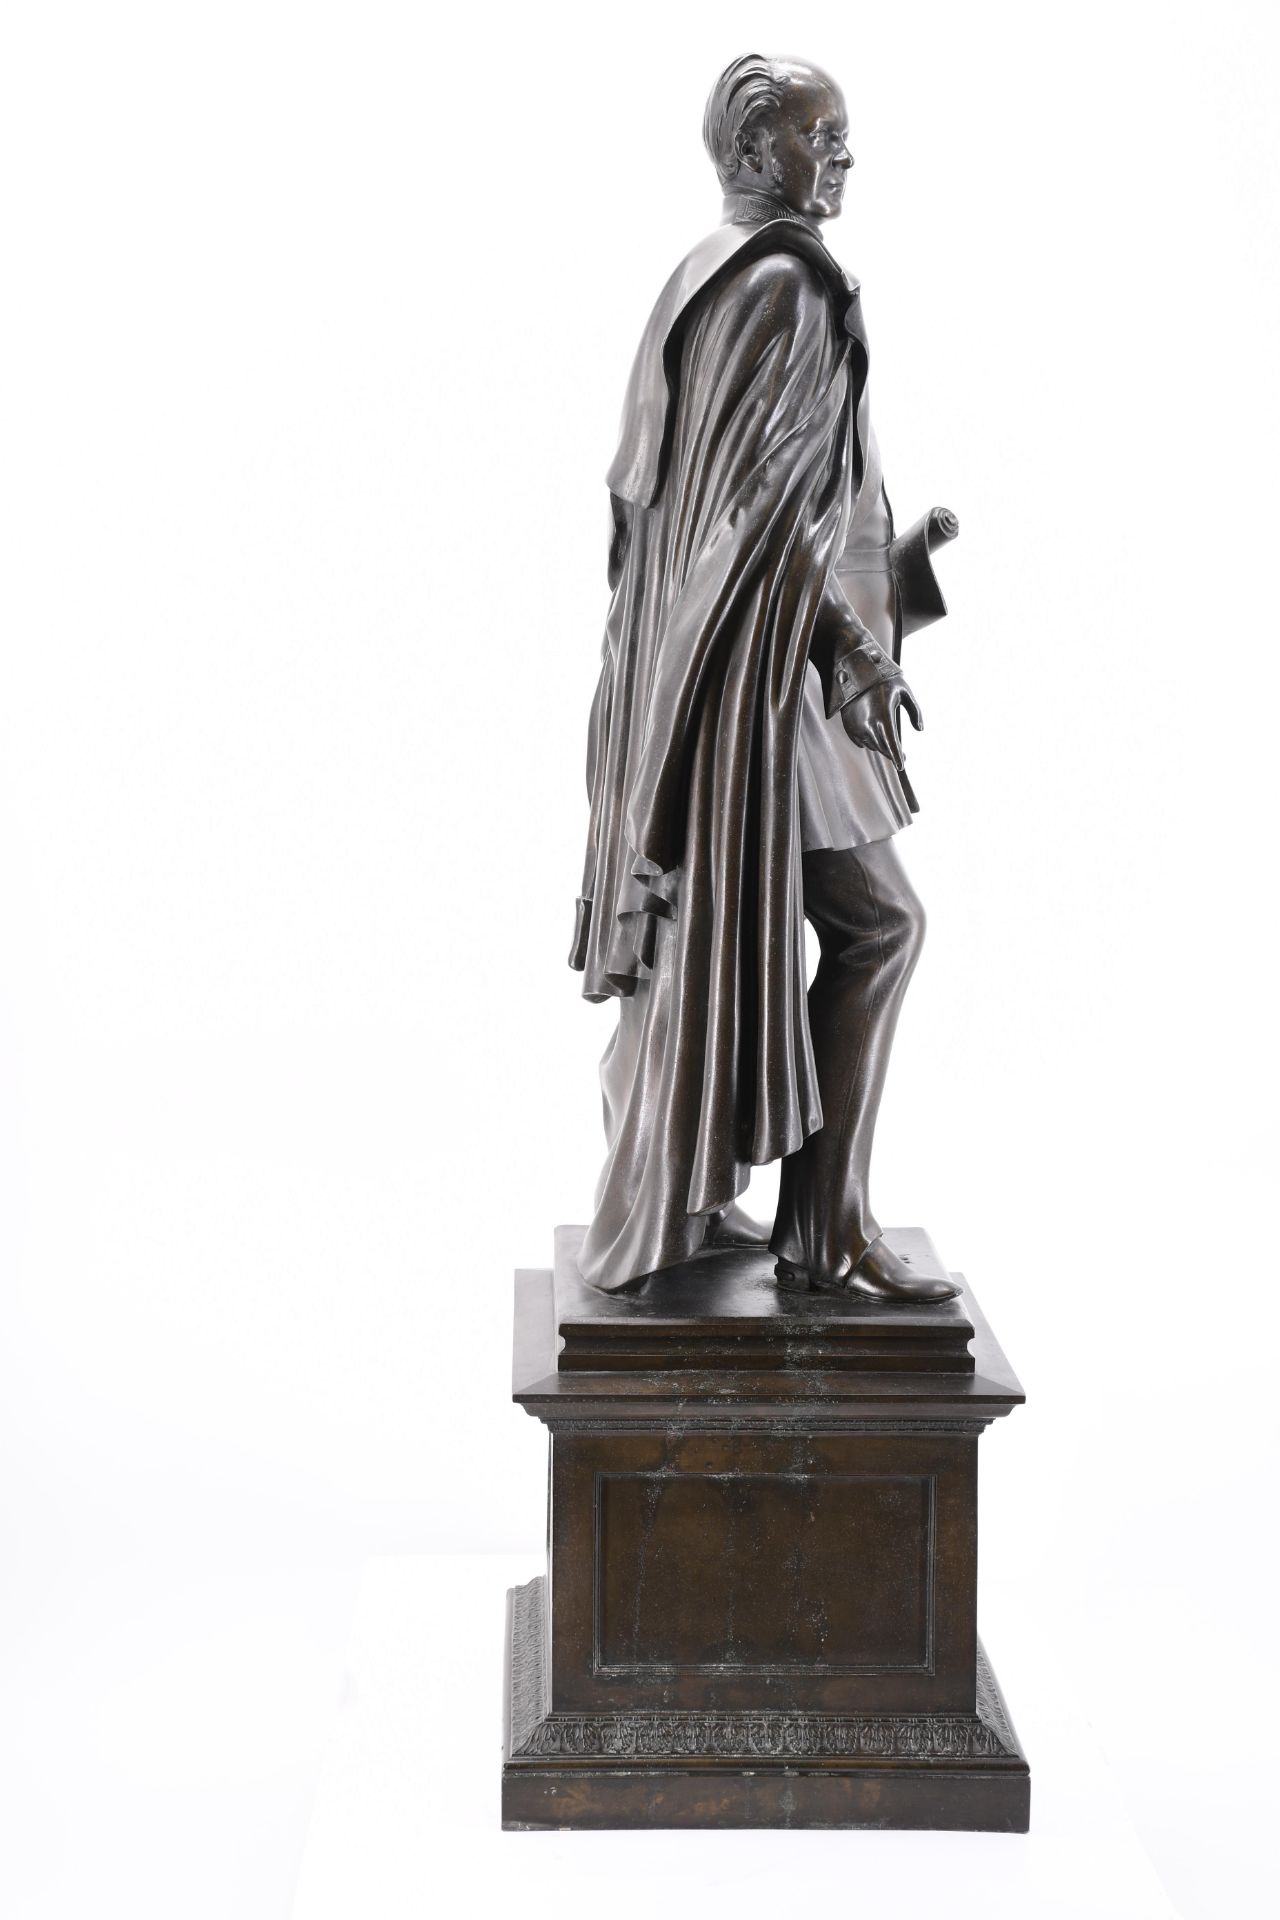 Carl Cauer 1828 Bonn - 1885 Bad Kreuznach: Statue of King Frederick William IV of Prussia - Image 9 of 12